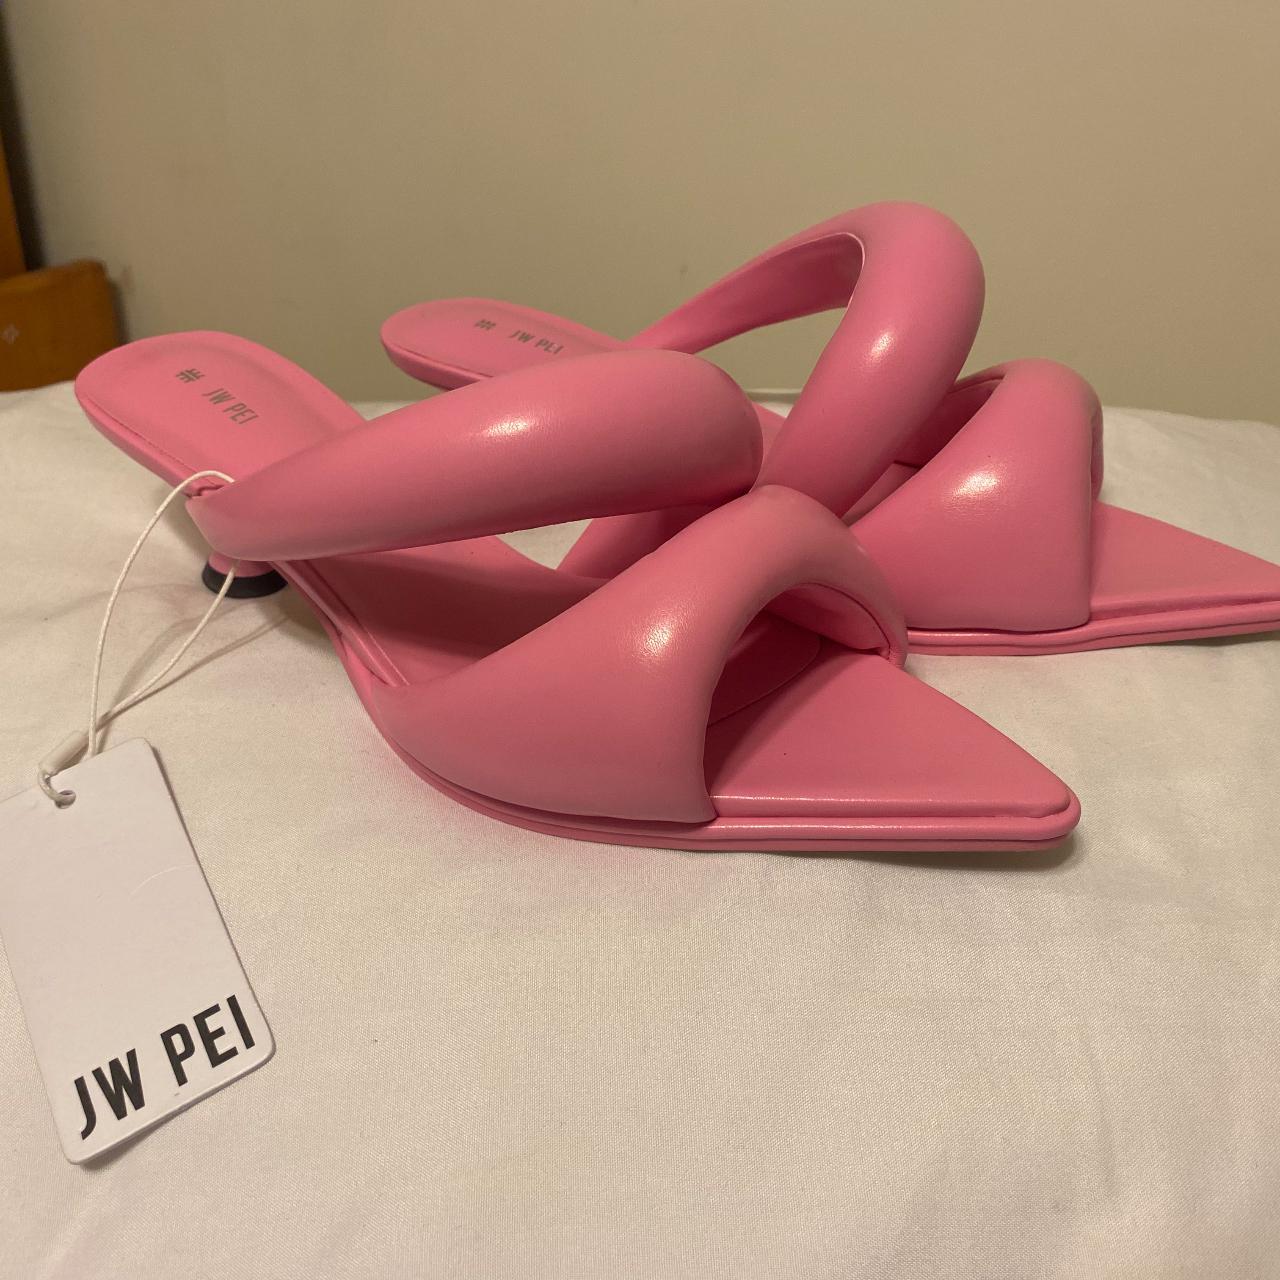 JW PEI Women's Sara Mule Heeled Sandals size 8 or 39 EU Lavender $89.99  MSRP NEW